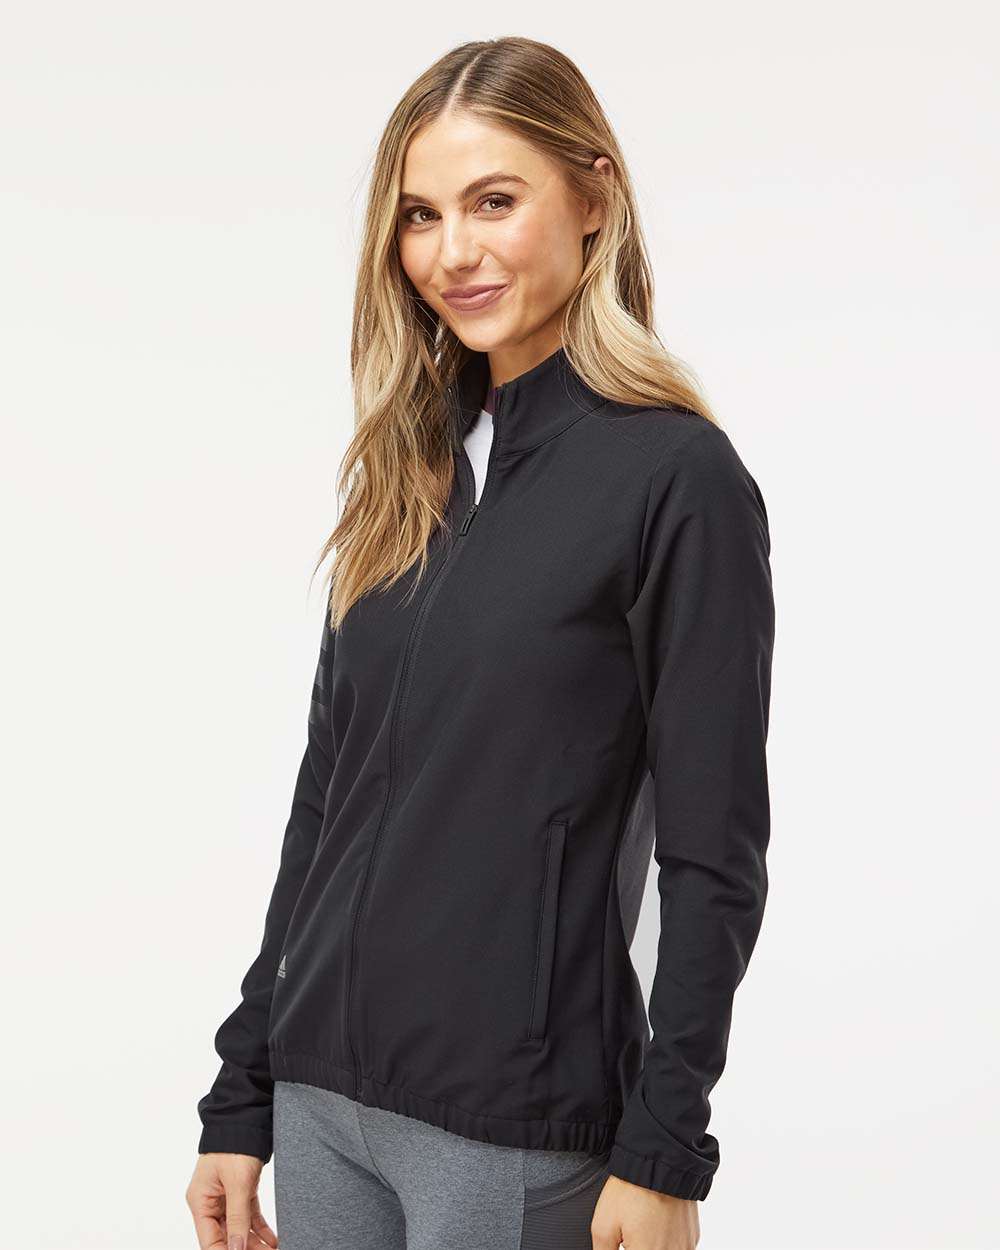 Adidas Women's 3-Stripes Full-Zip Jacket #A268 Black